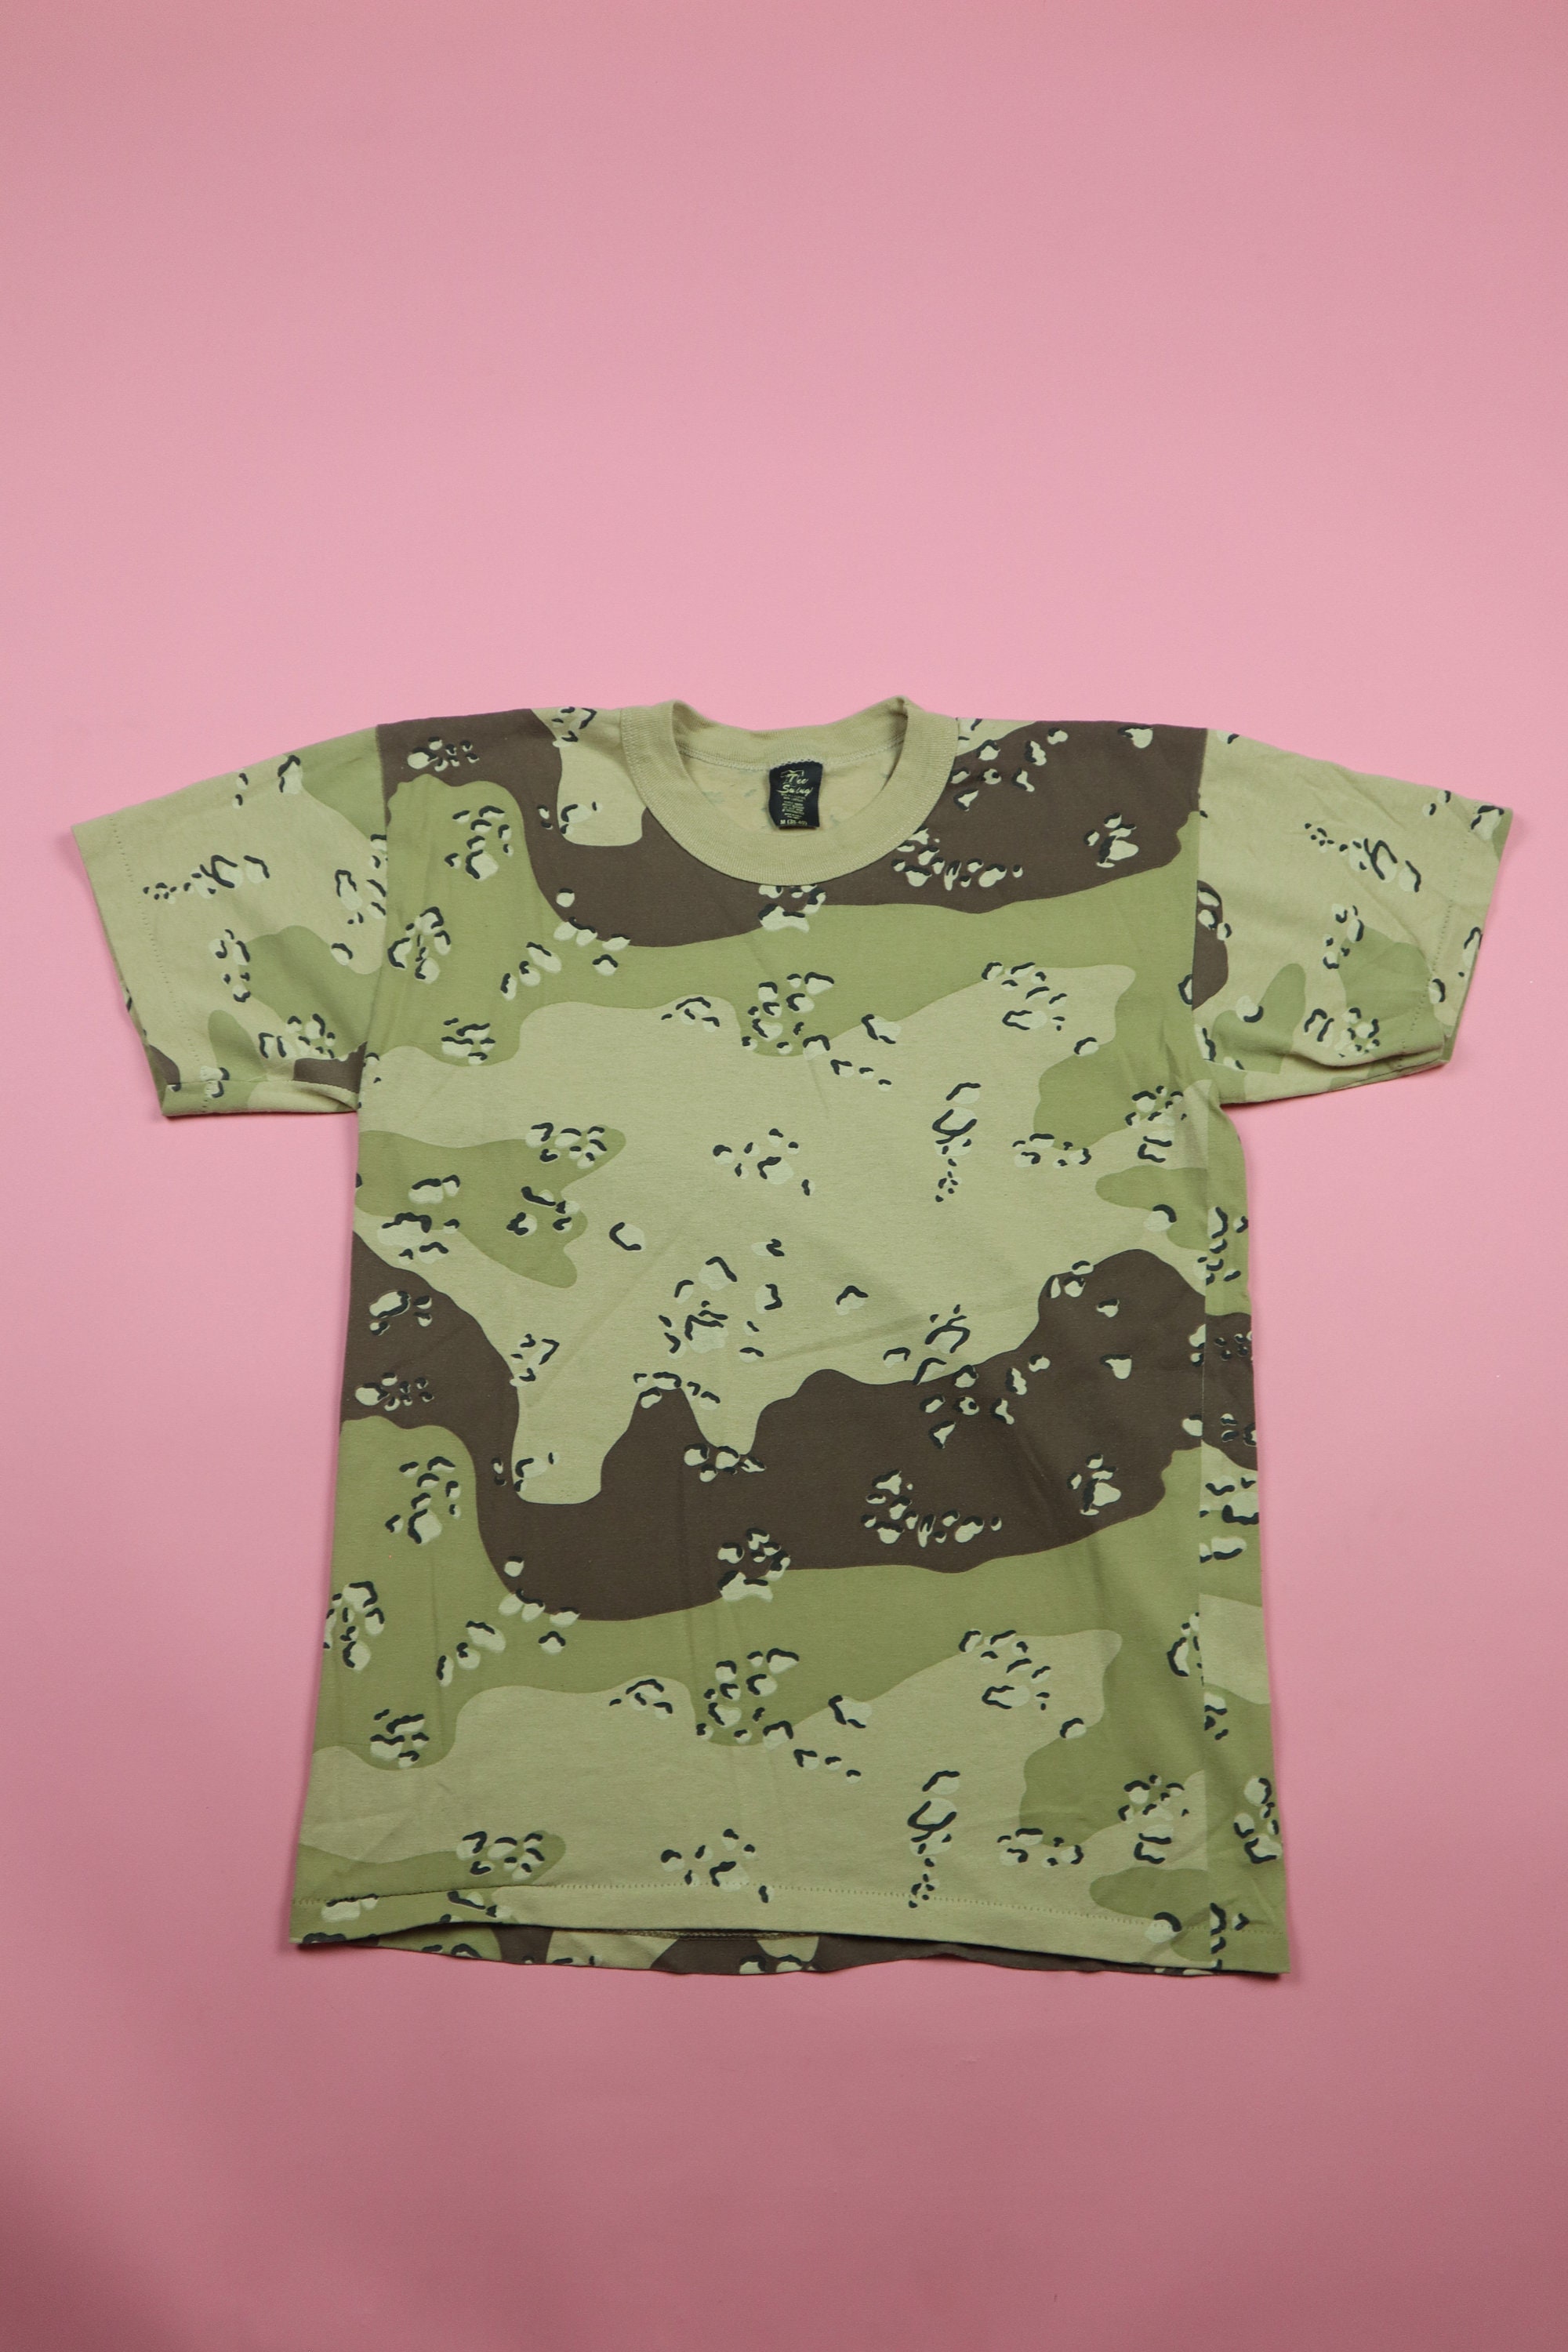 Desert Storm Camouflage Army Combat vintage Tshirt